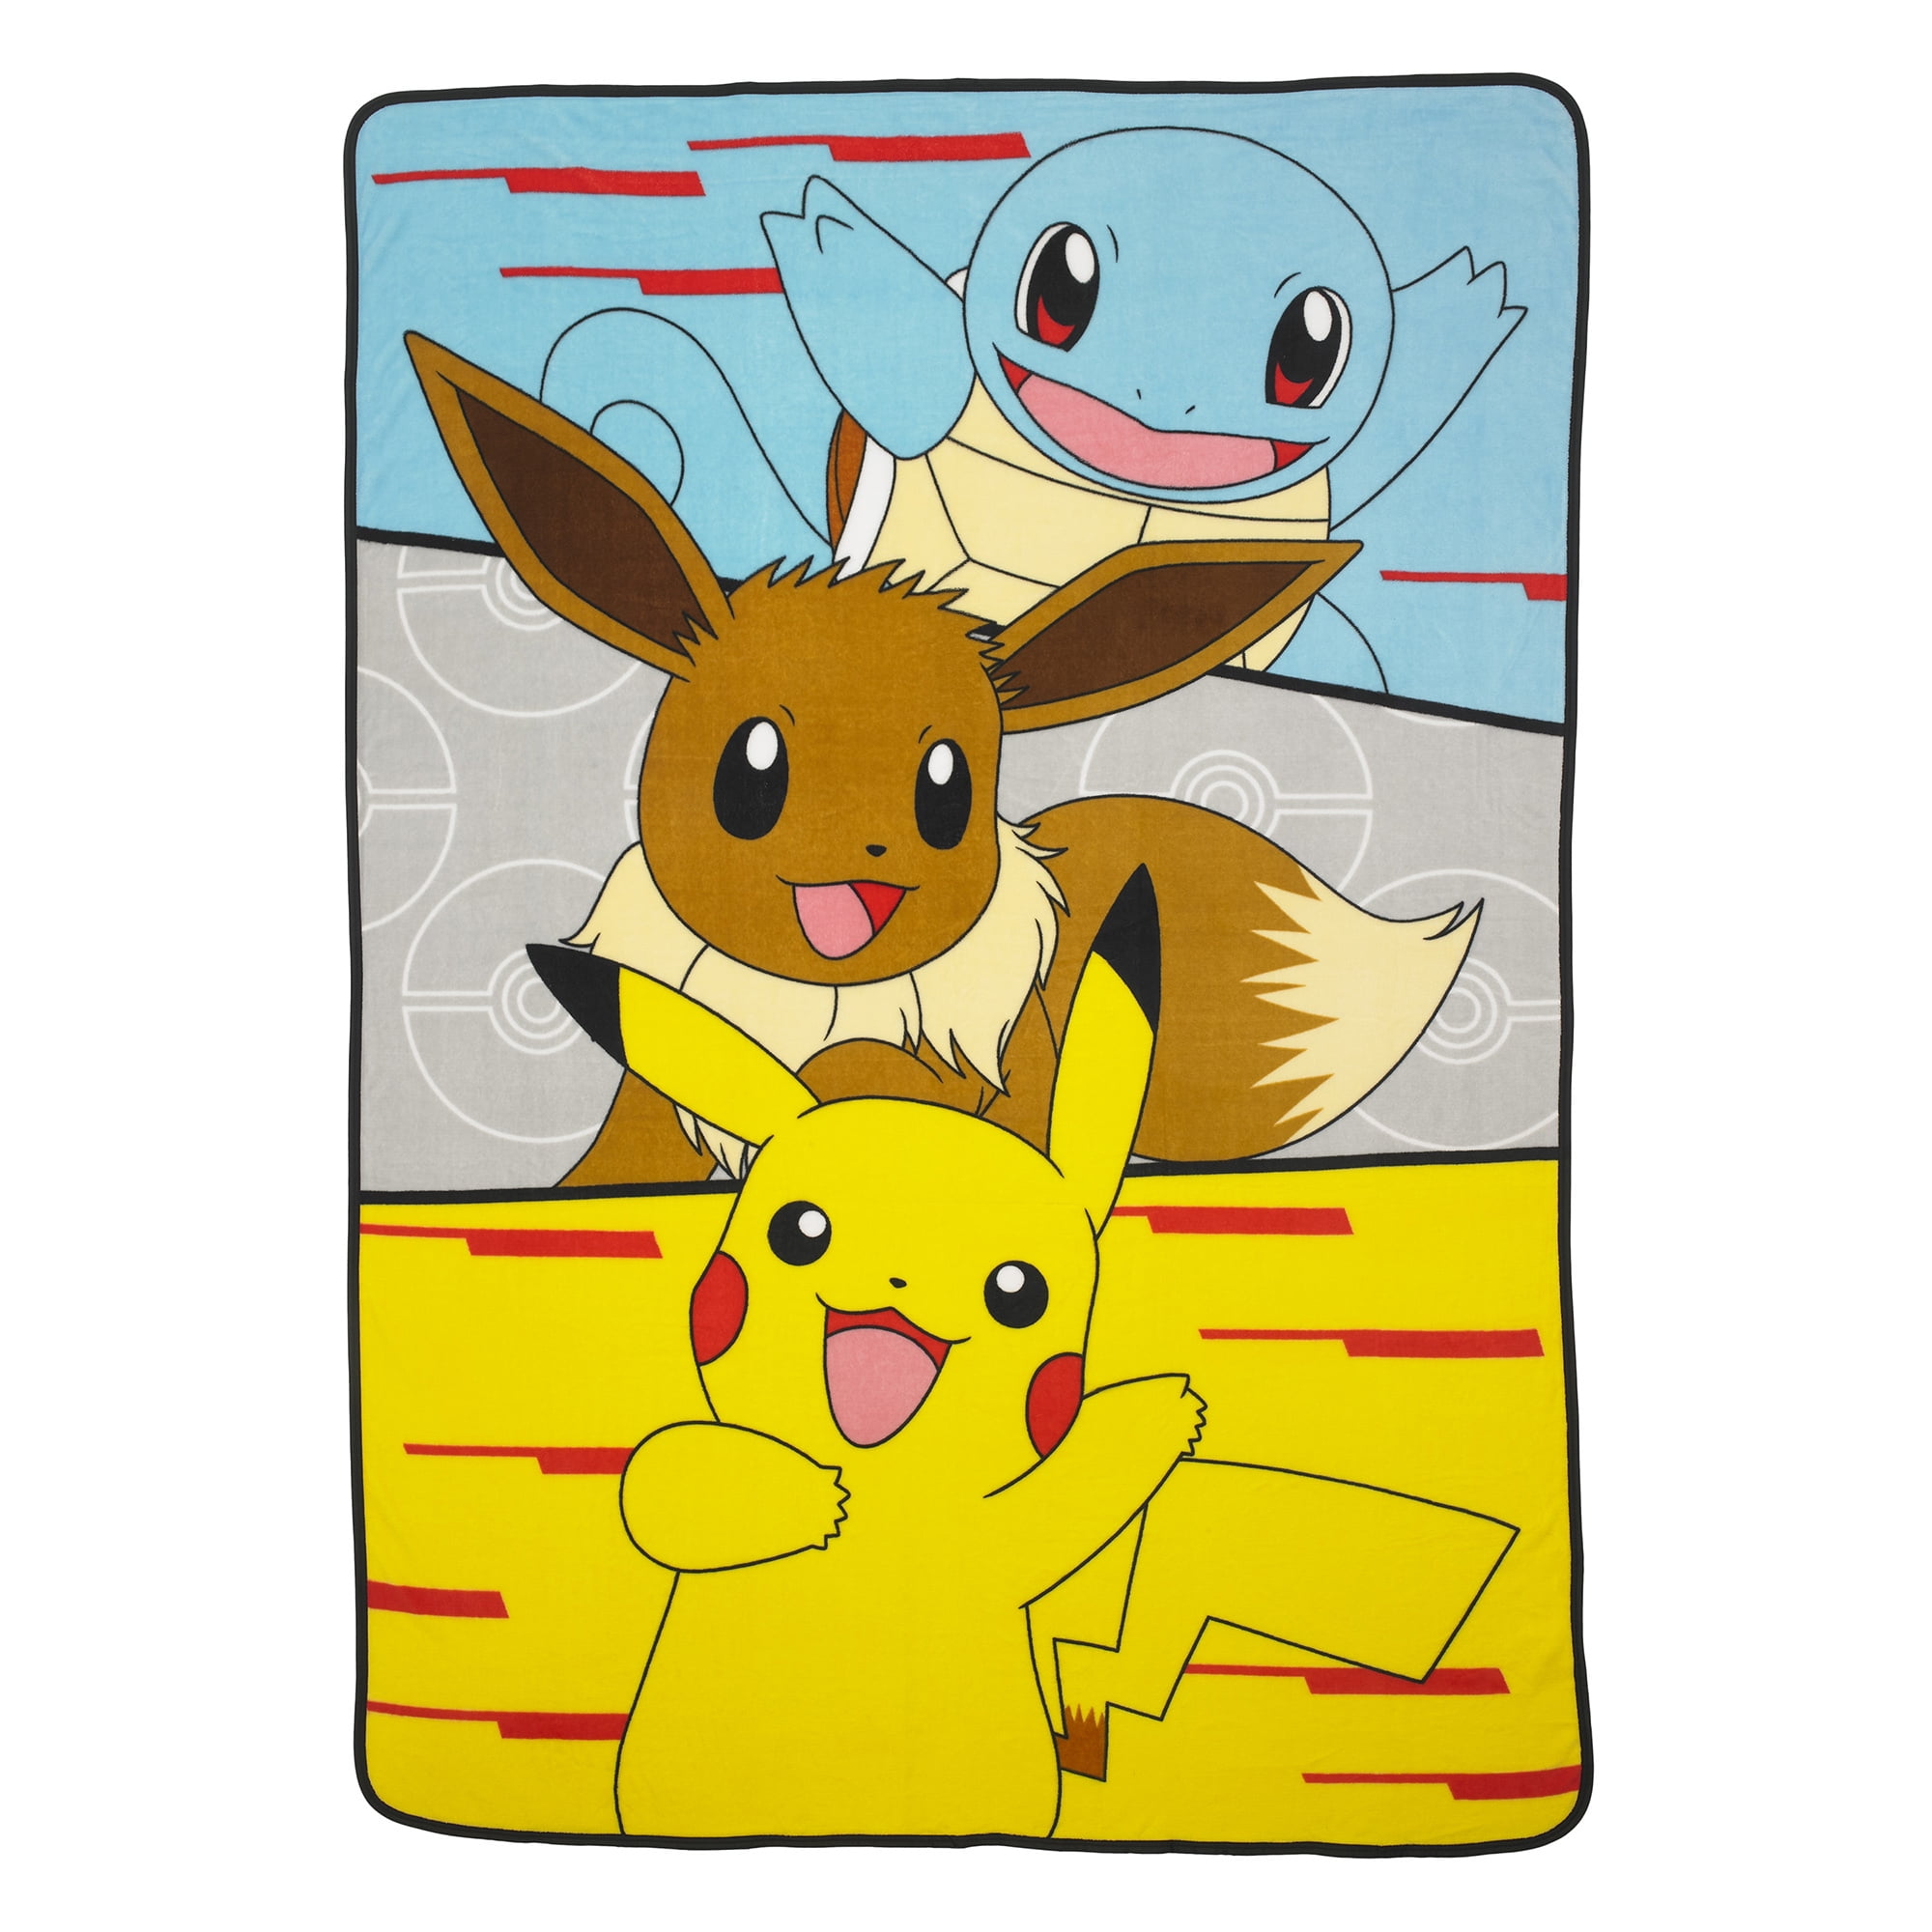 Brand new Pokemon Pikachu Games boys kids children cartoon Blanket throw rug 